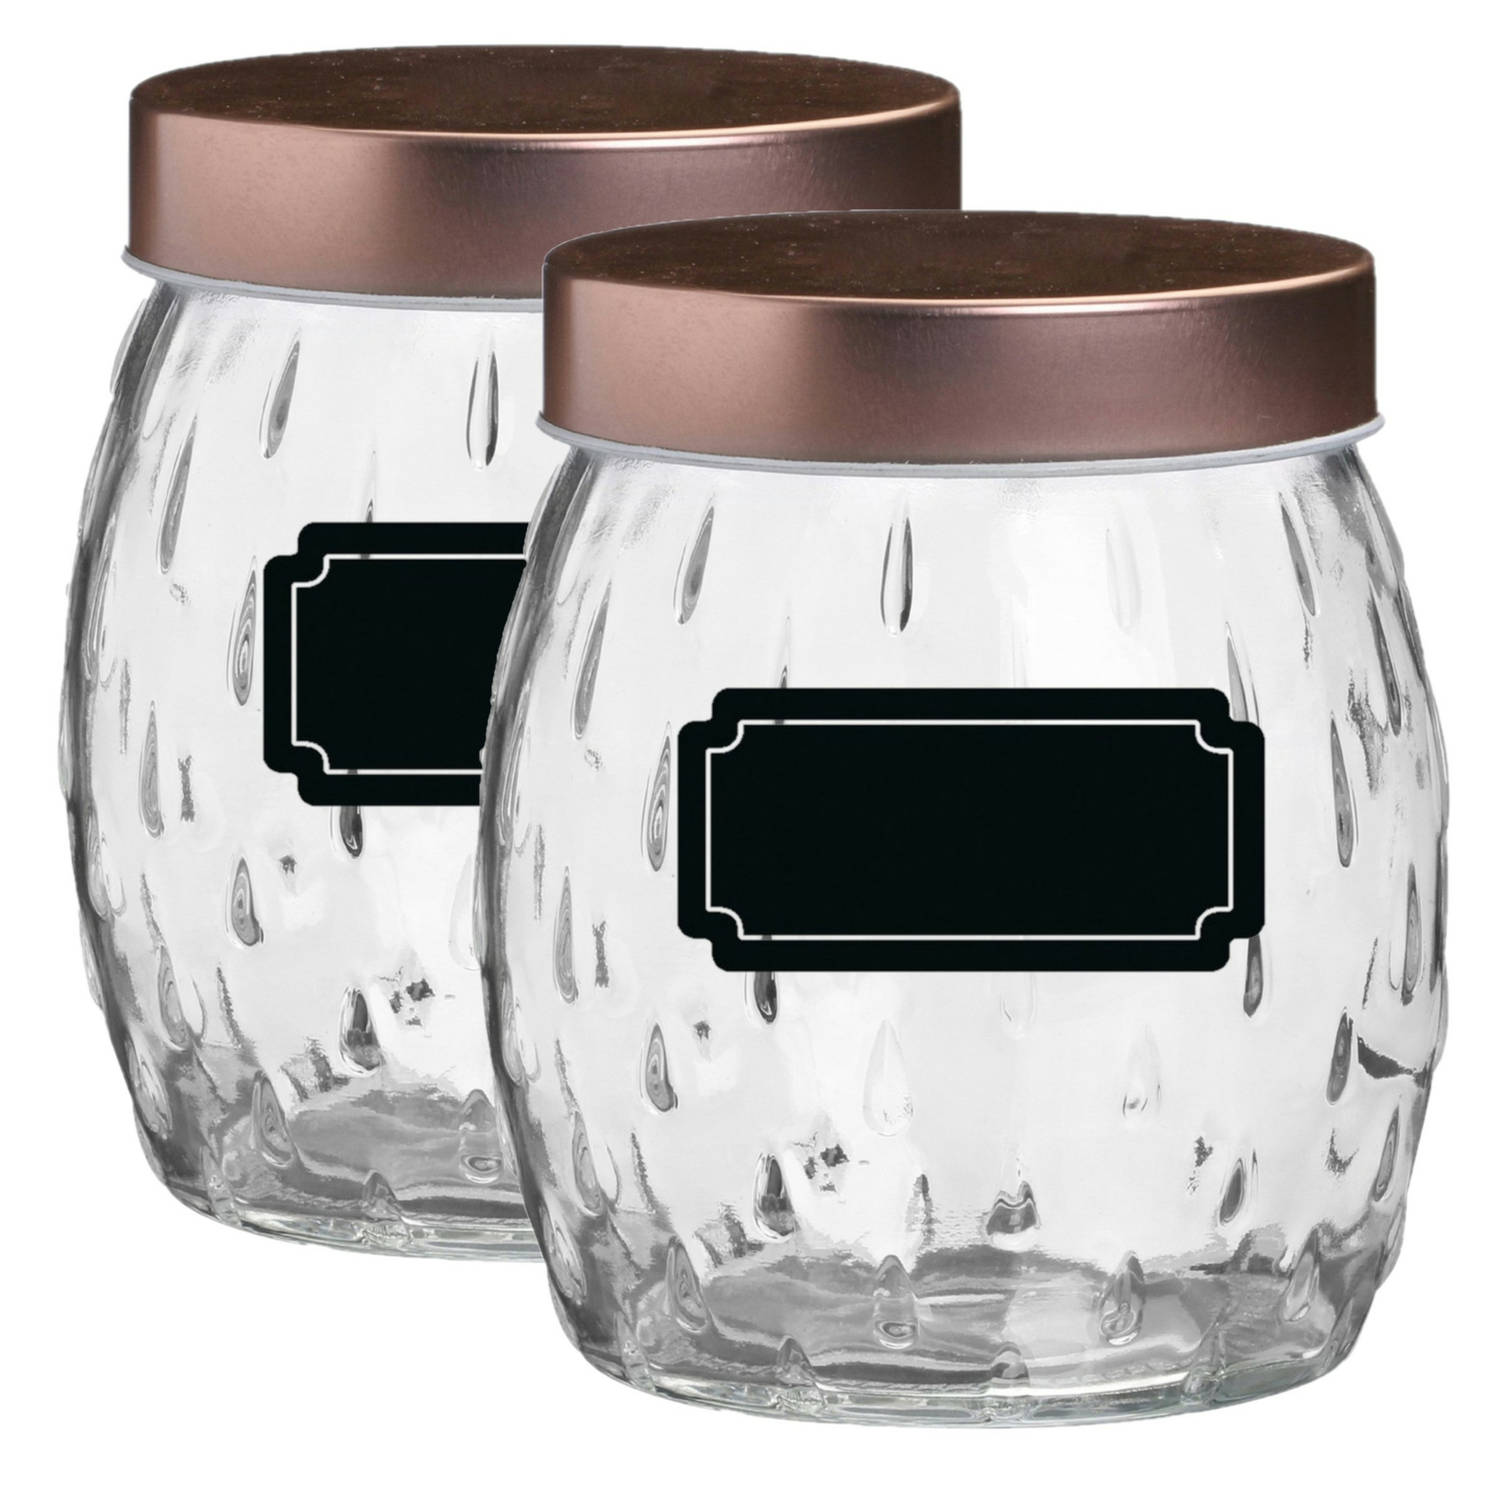 Voorraadpot/bewaarpot Beau - 4x - 1L - glas - koperen deksel - incl. etiketten - Weckpotten